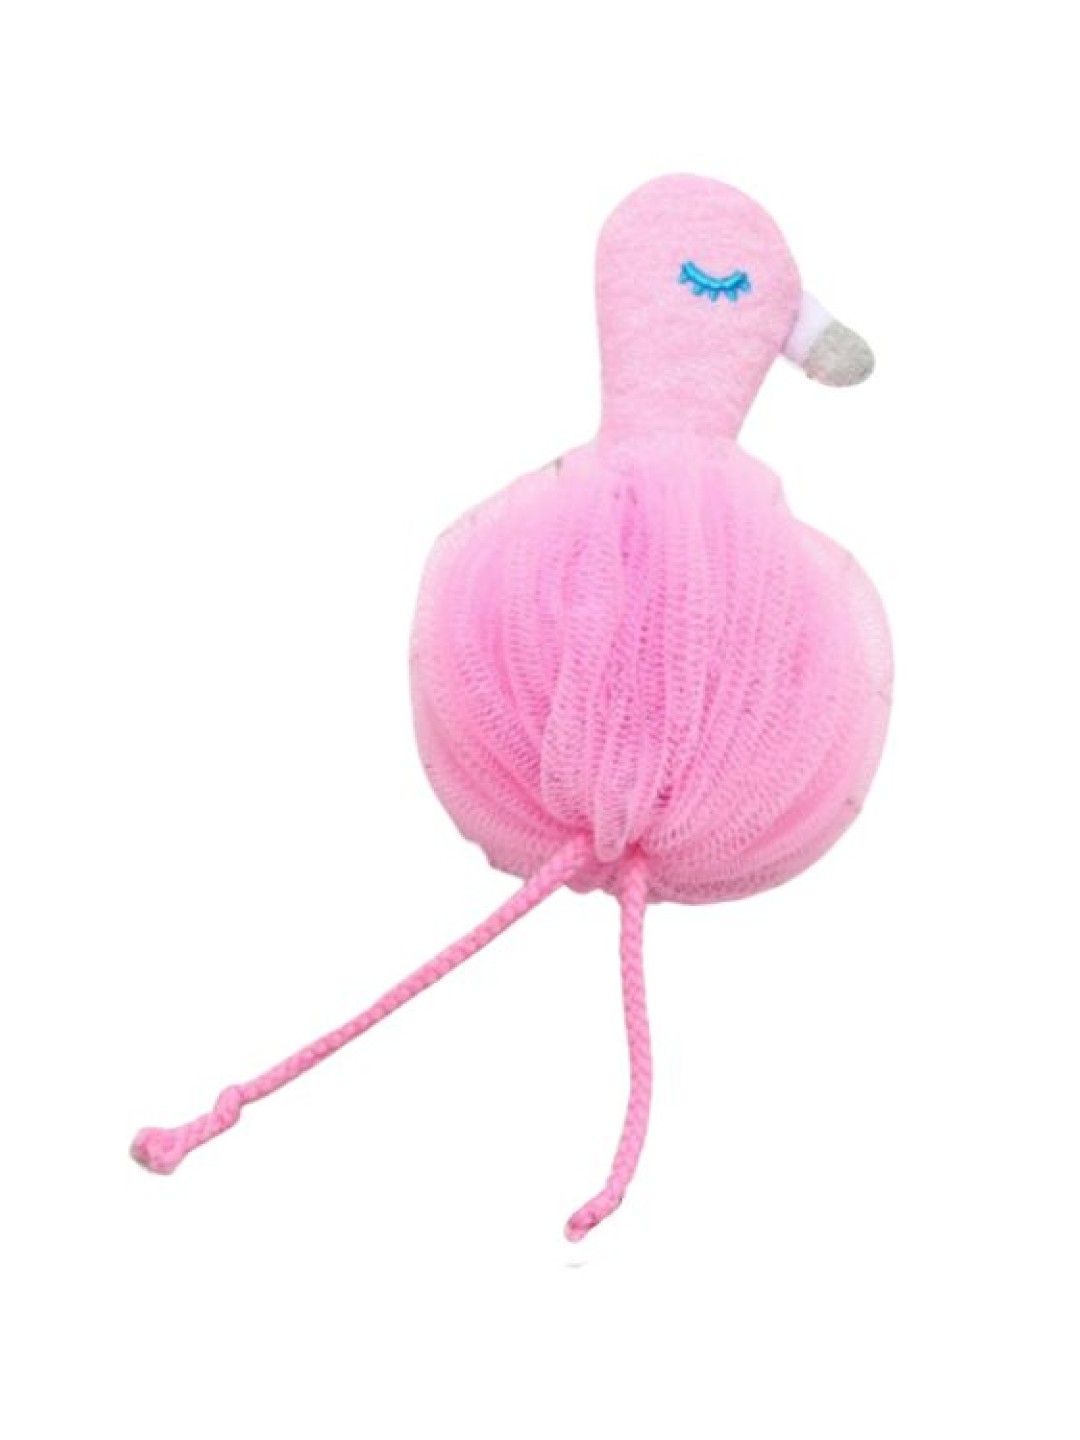 Scenti Flamingo Design Bath Sponge Mesh Ball Exfoliator